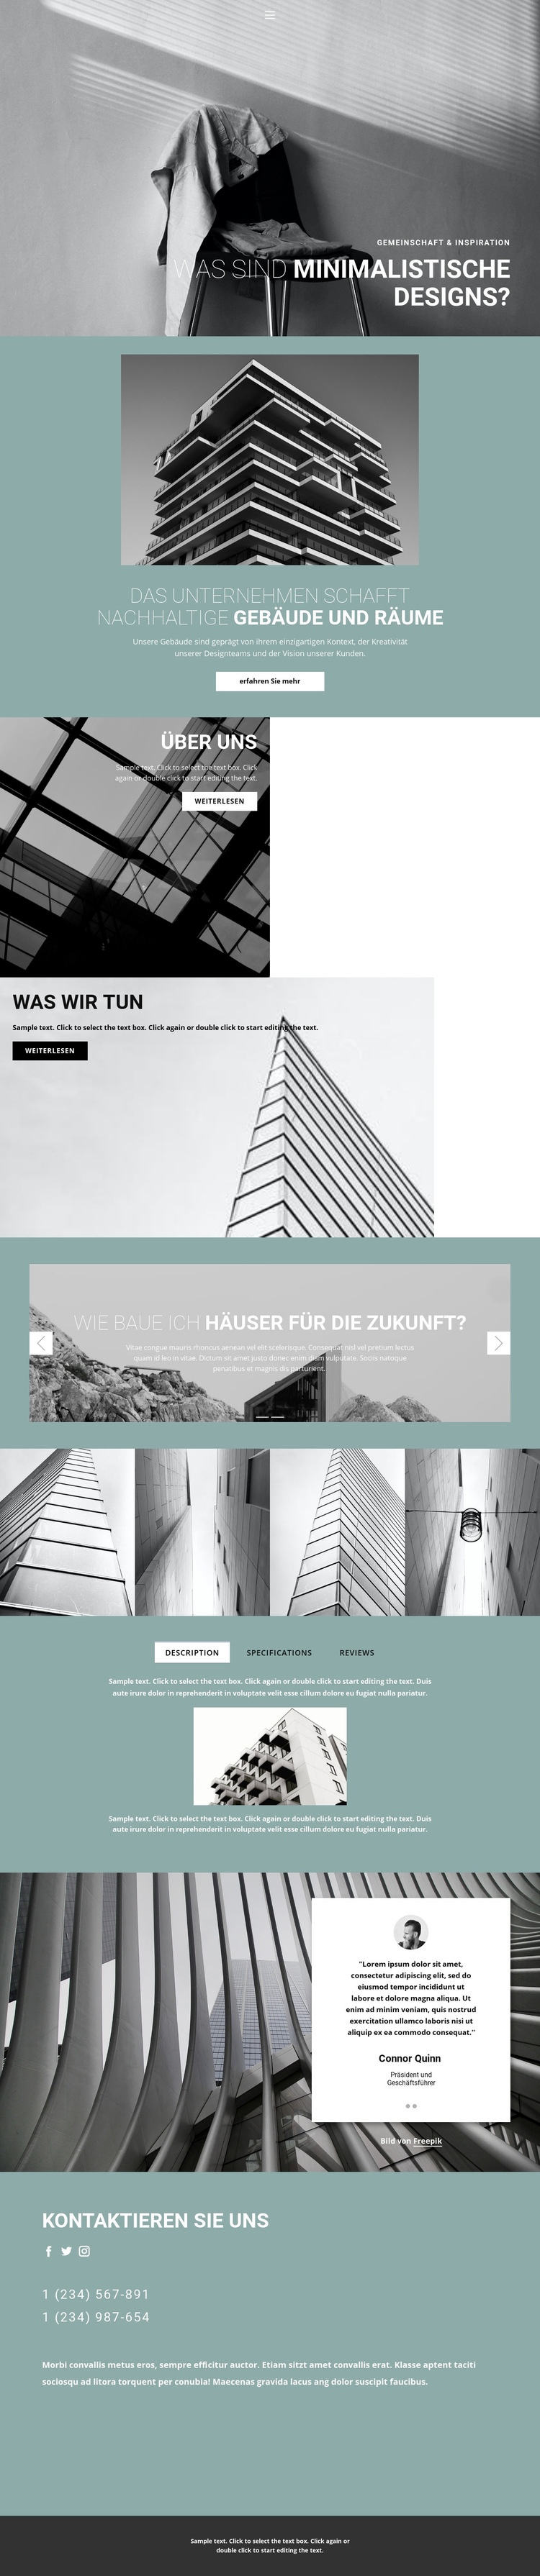 Perfekte Architekturideen Website-Modell